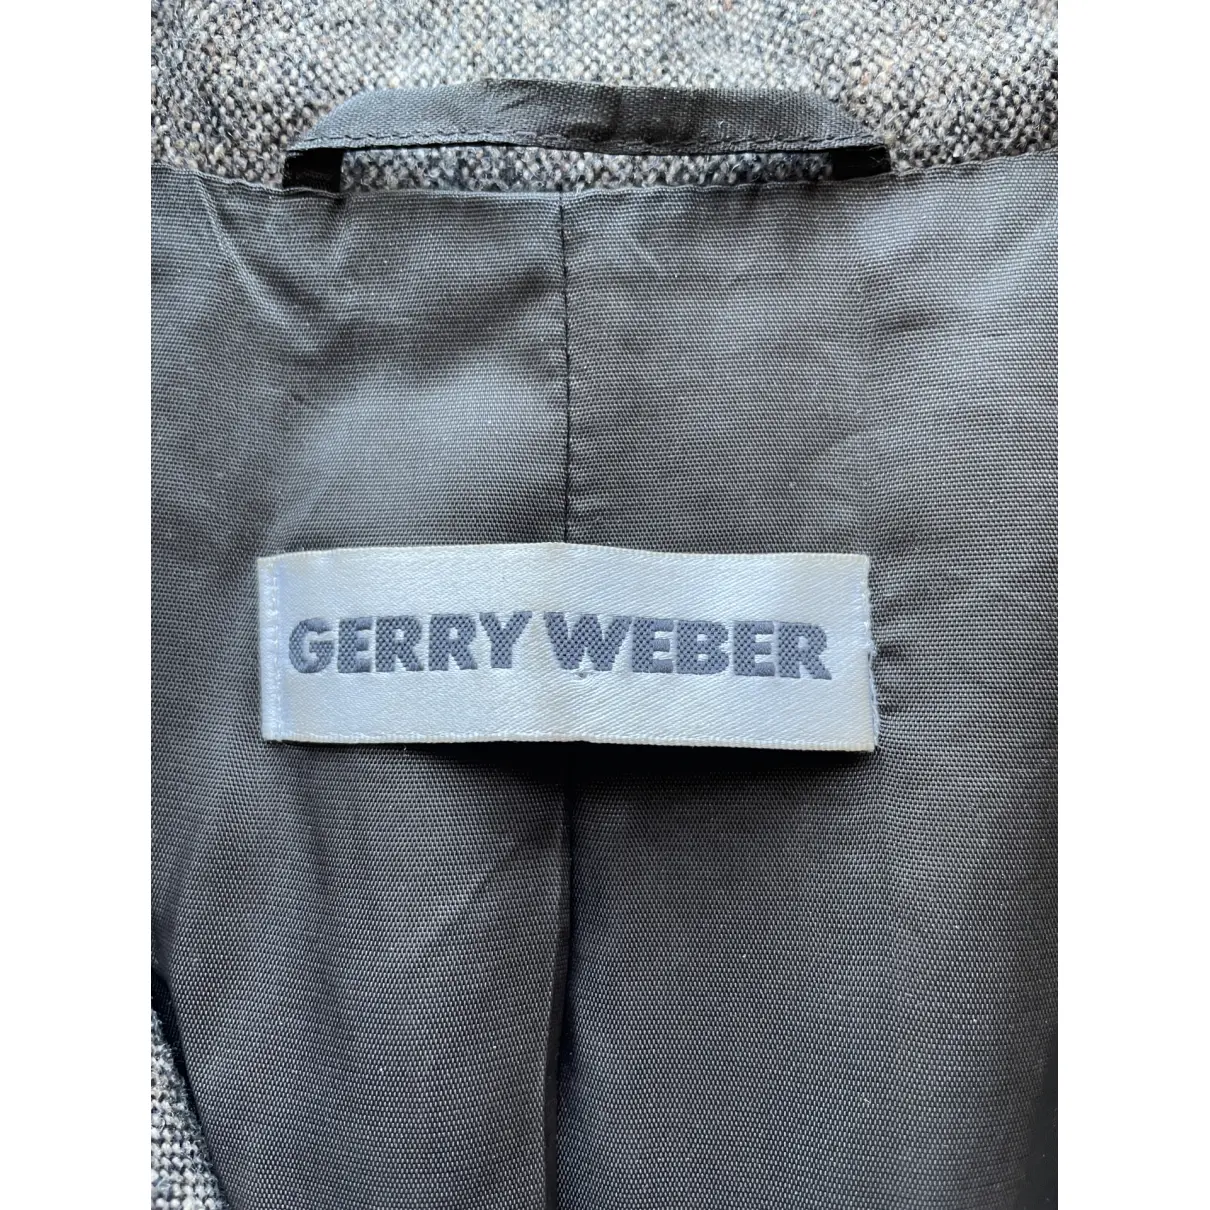 Buy Gerry Weber Wool jacket online